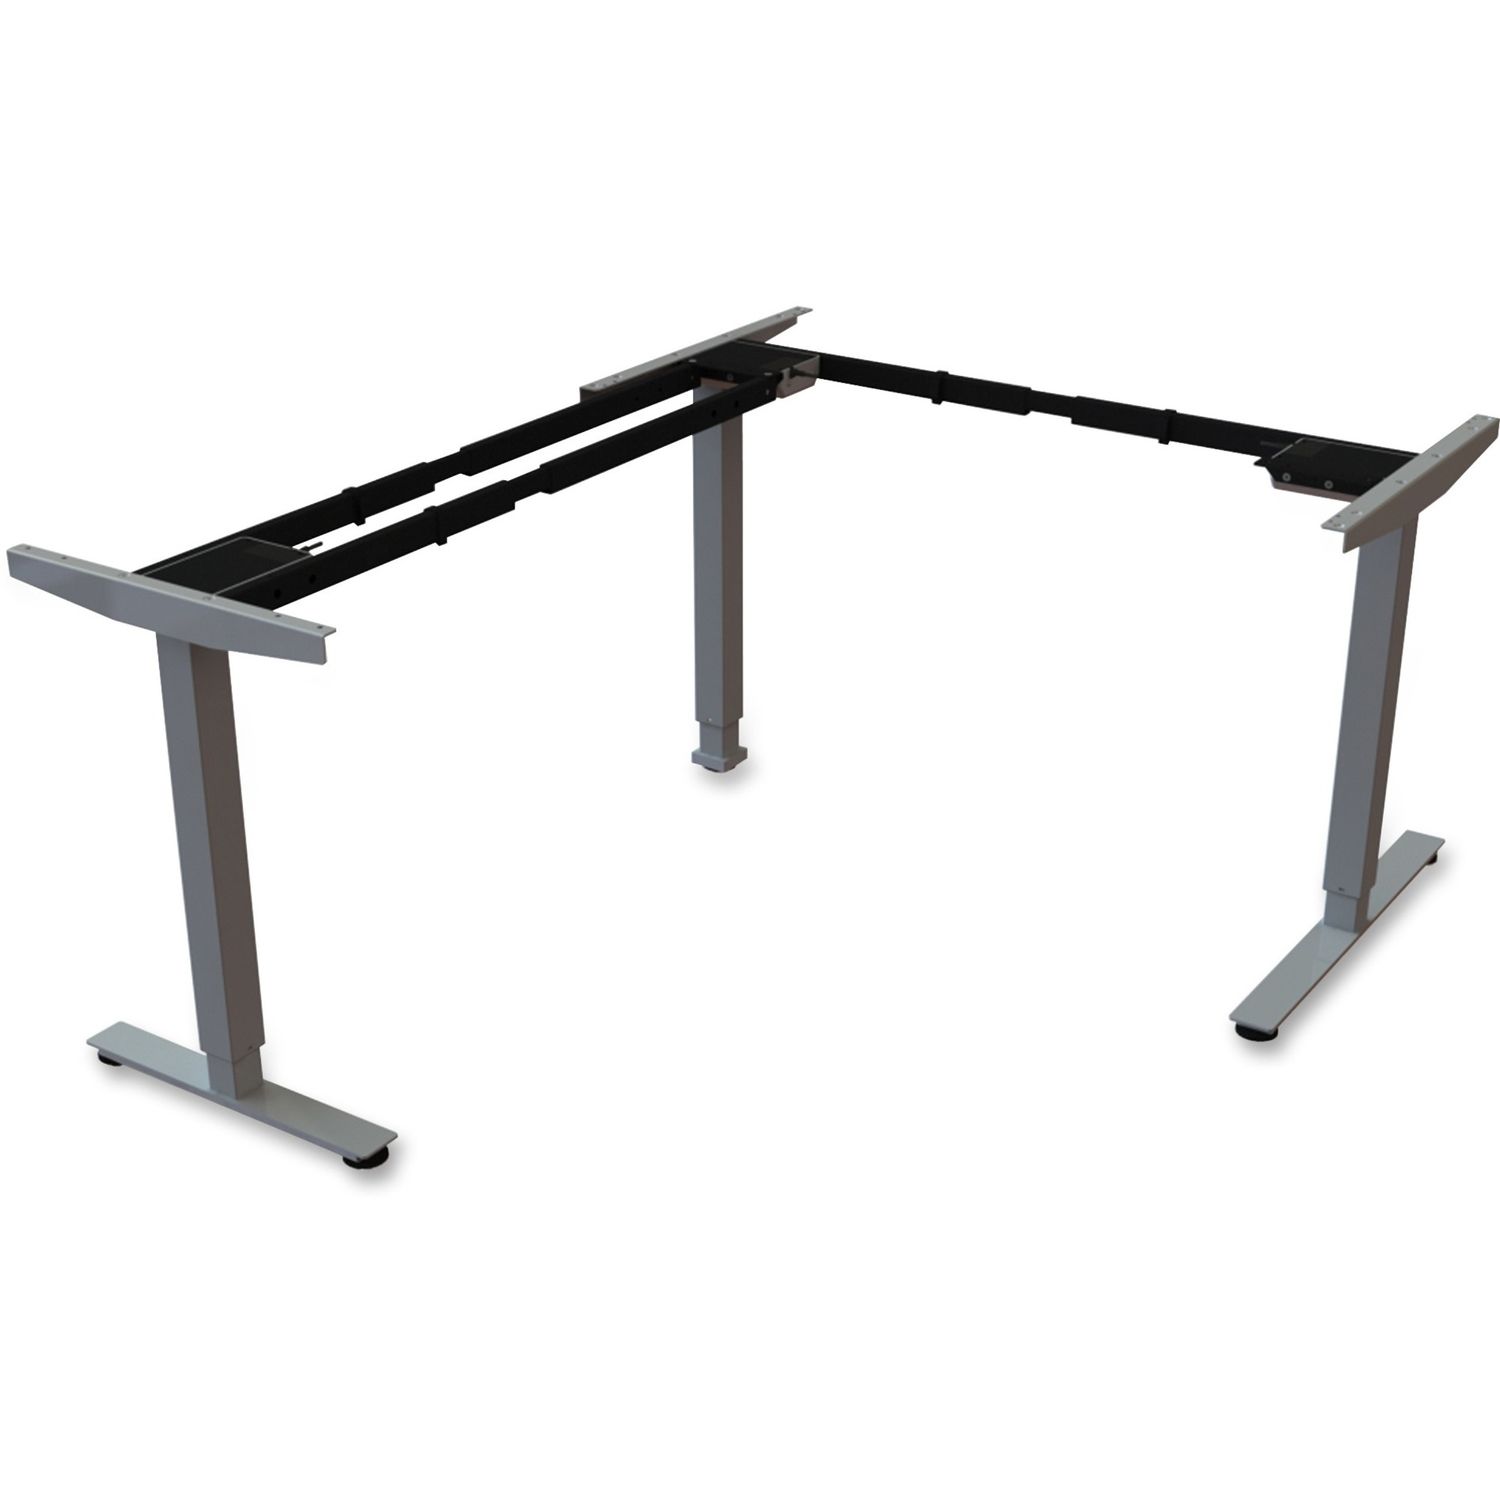 Sit/Stand Desk Third-leg Add-on Kit 275 lb Weight Capacity x 24" Width x 44" Depth x 26.5" Height, Black